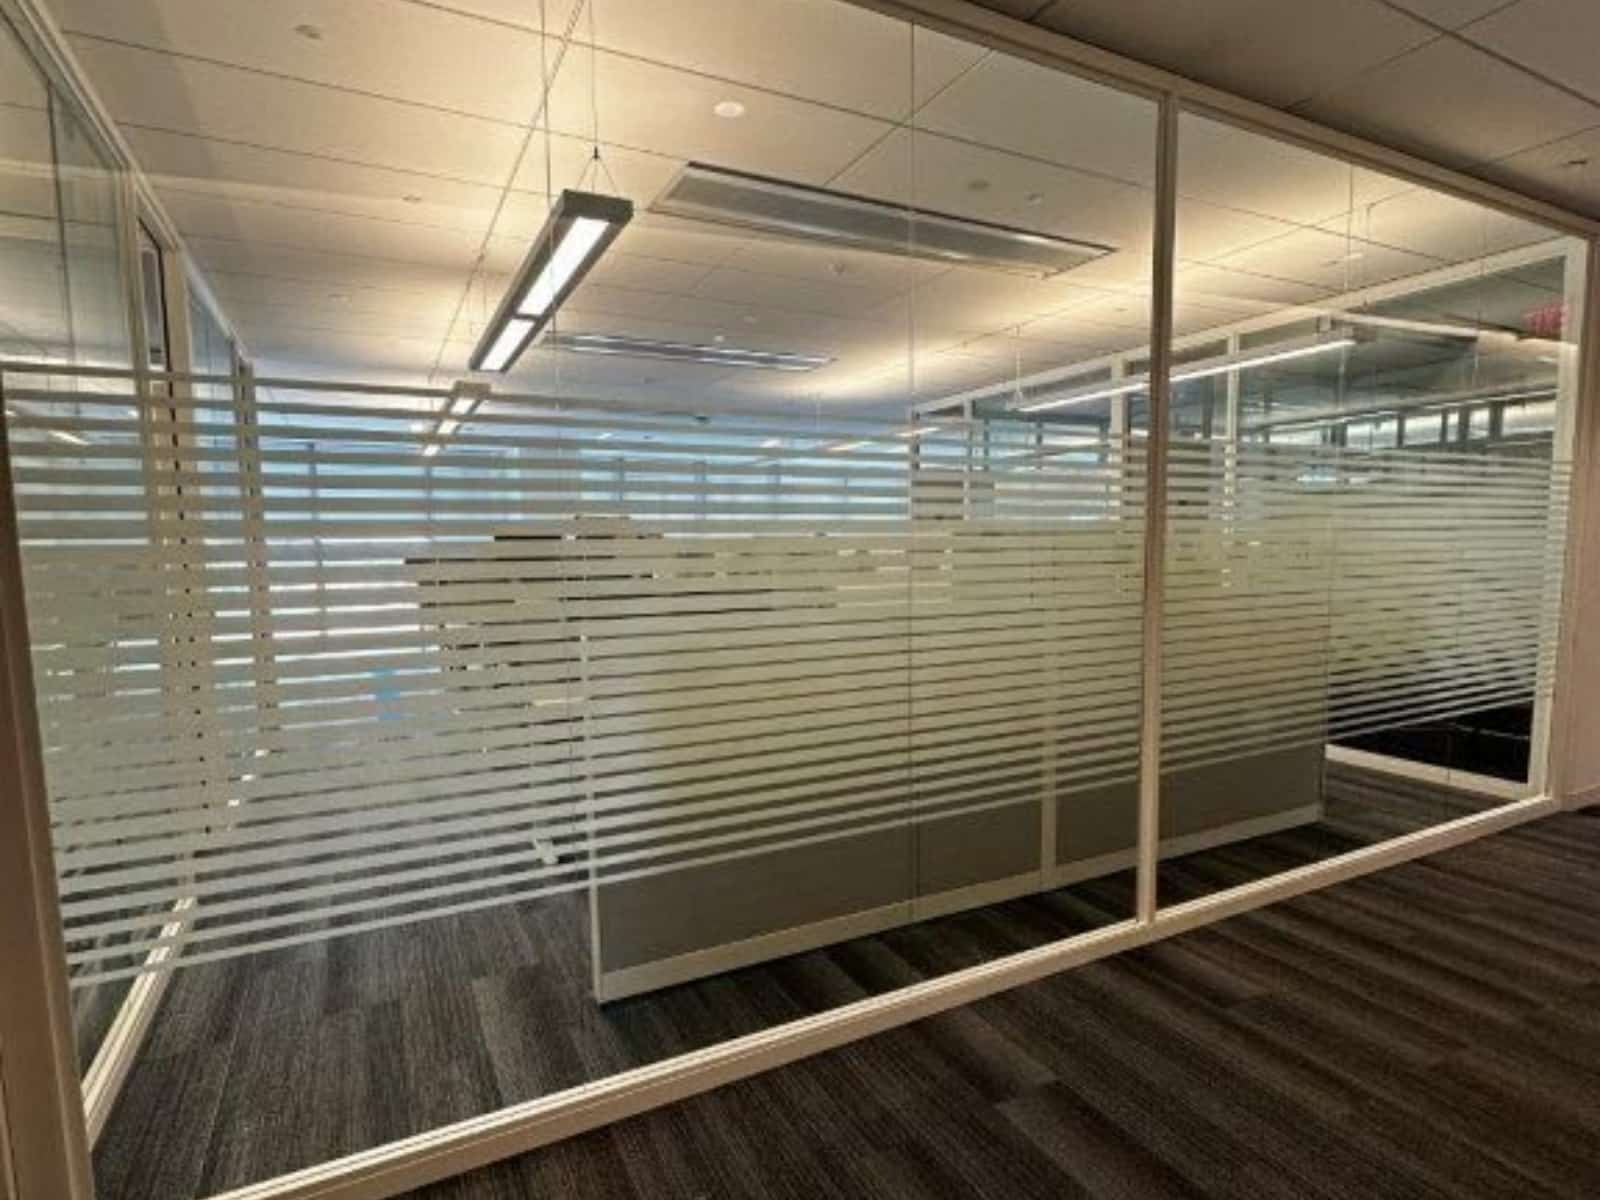 How decorative window films help employee well-being